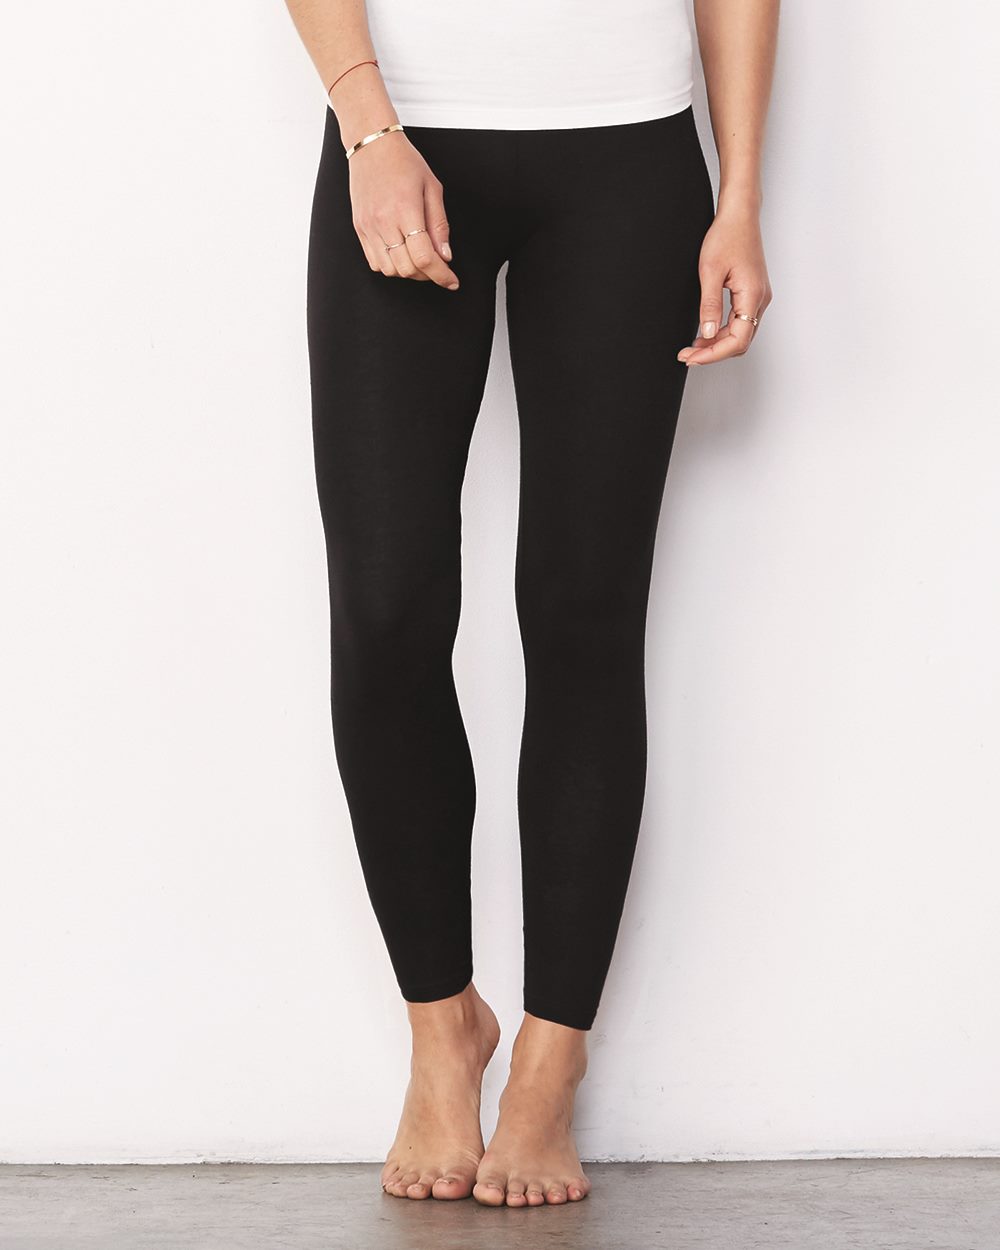 Bella womens Cotton/Spandex Legging(812)-BLACK-XL at